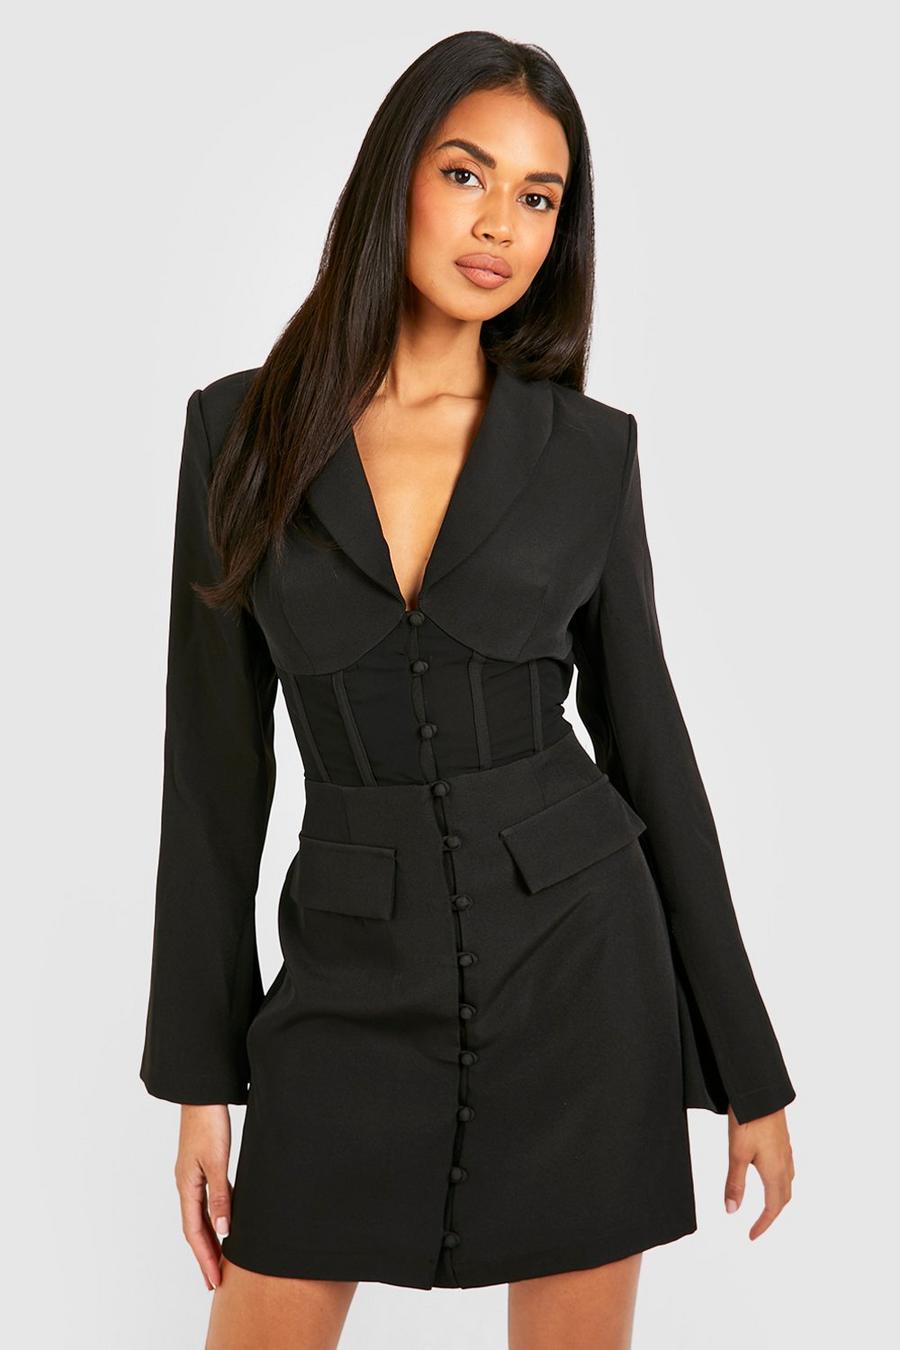 Black Corset Detail Tailored Blazer Dress